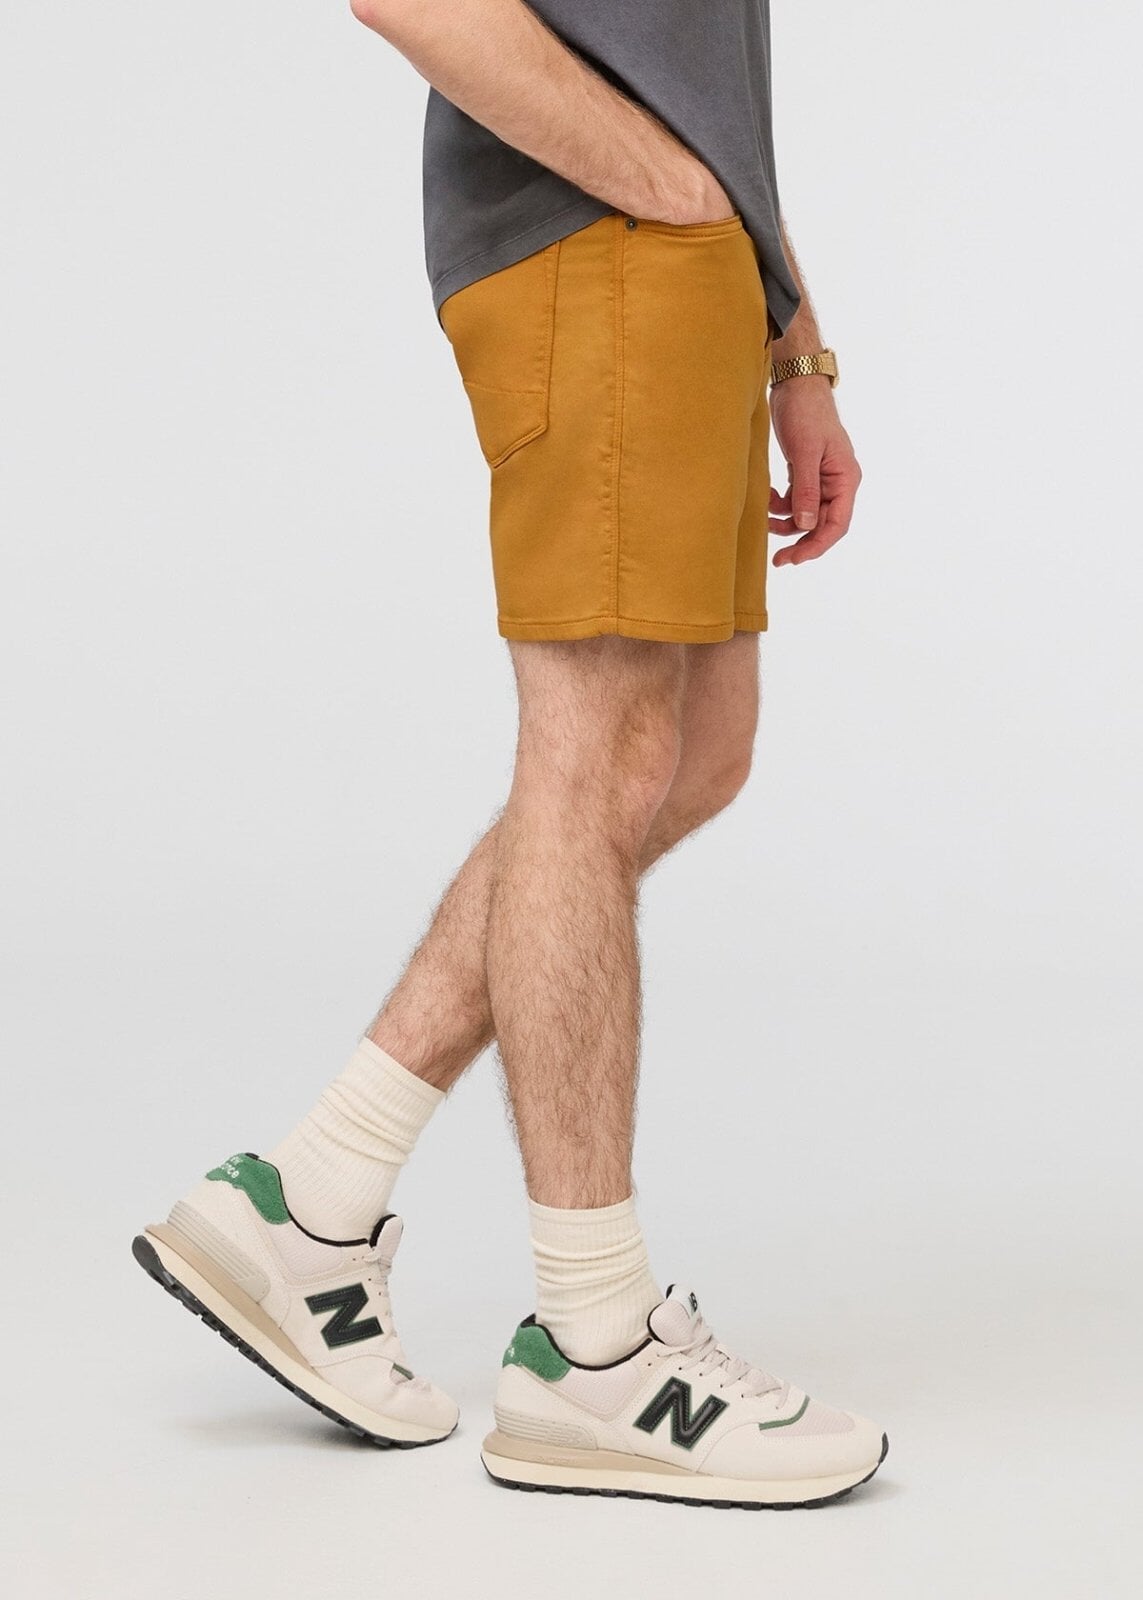 Buy Trendy Dukaan - Men's Twill Cotton Shorts (Black, L (28-30 Waist)) at